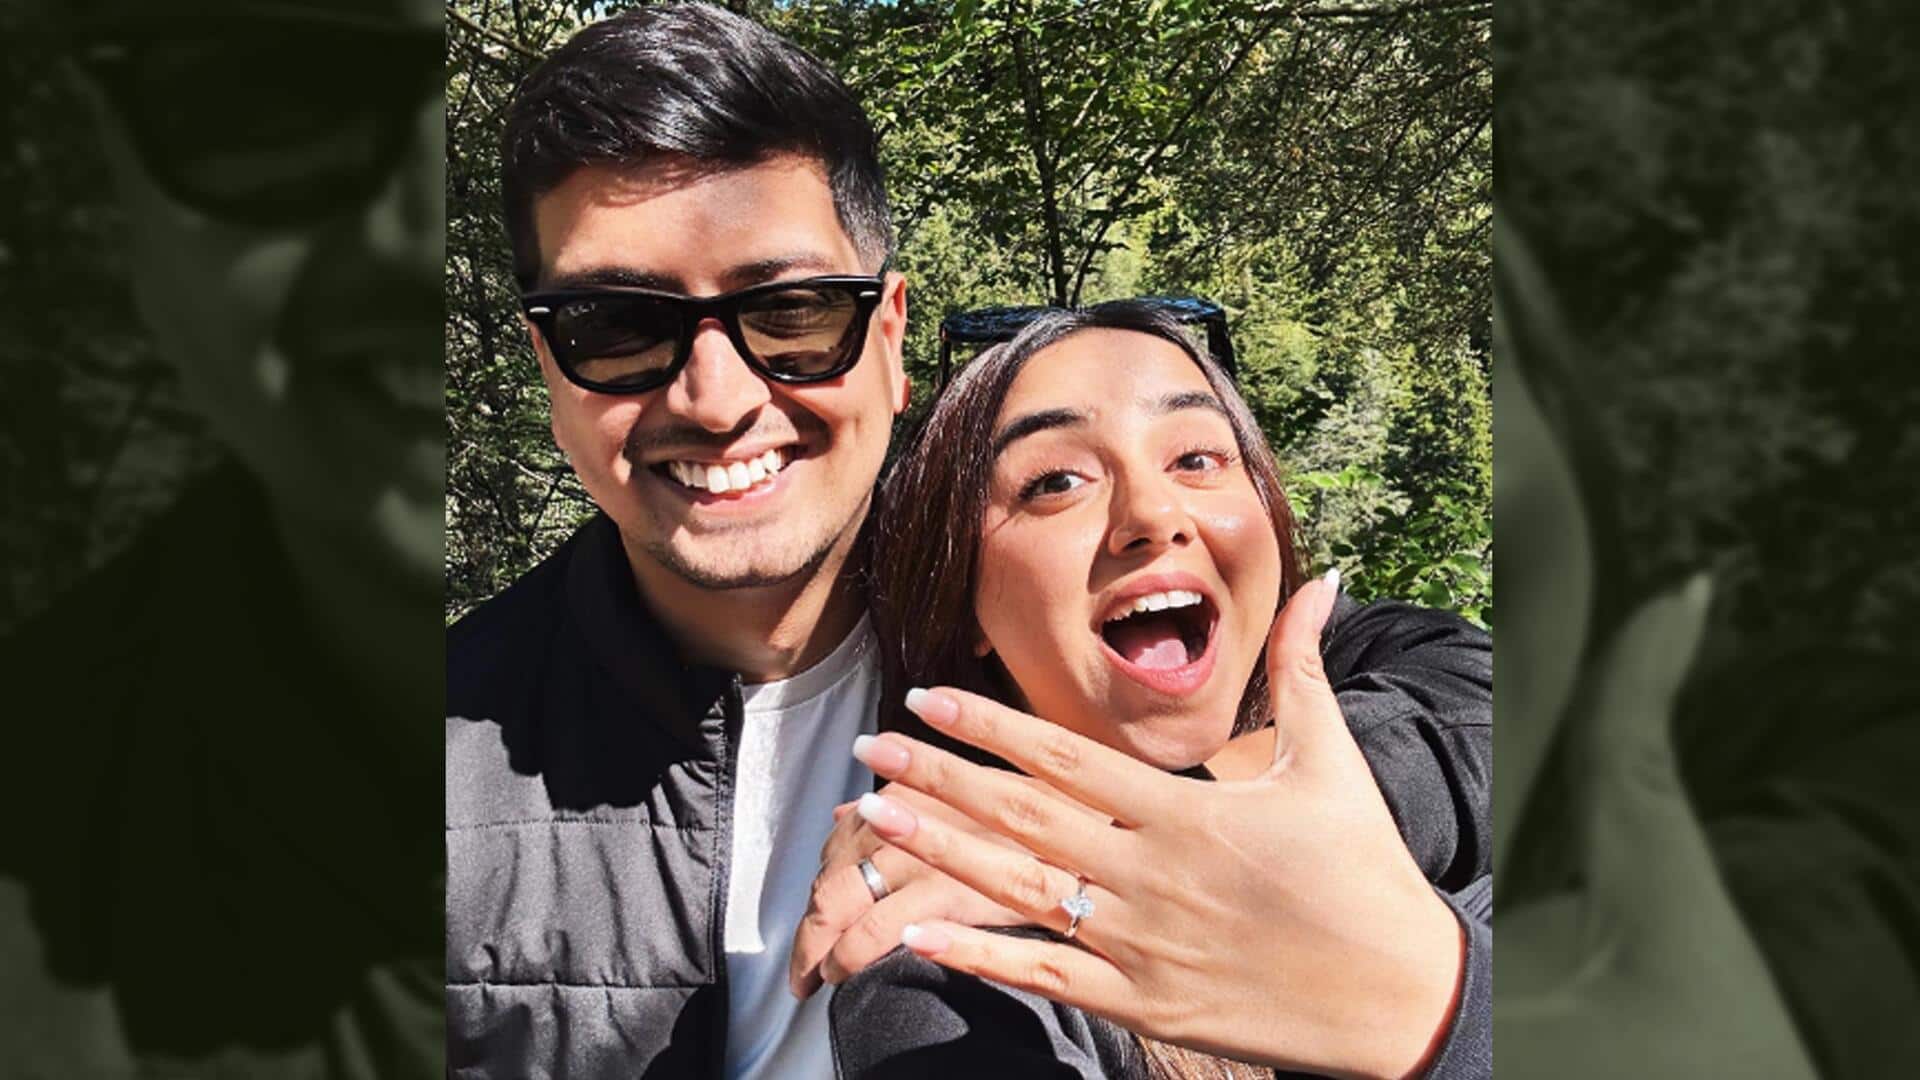 Congratulations! Prajakta Koli and Vrishank Khanal are now engaged